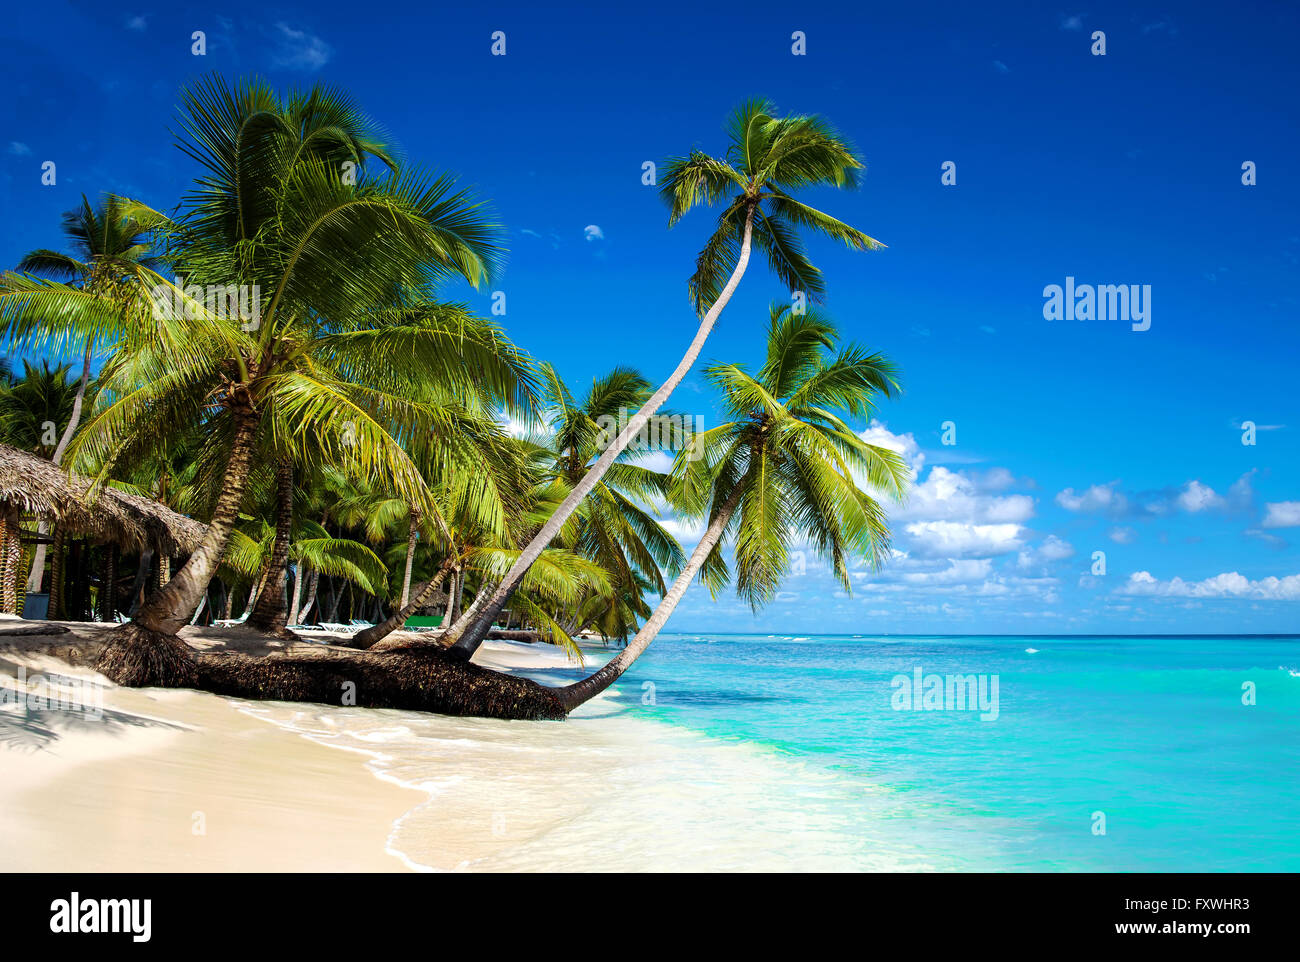 Tropical beach in caribbean sea, Saona island, Dominican Republic Stock Photo